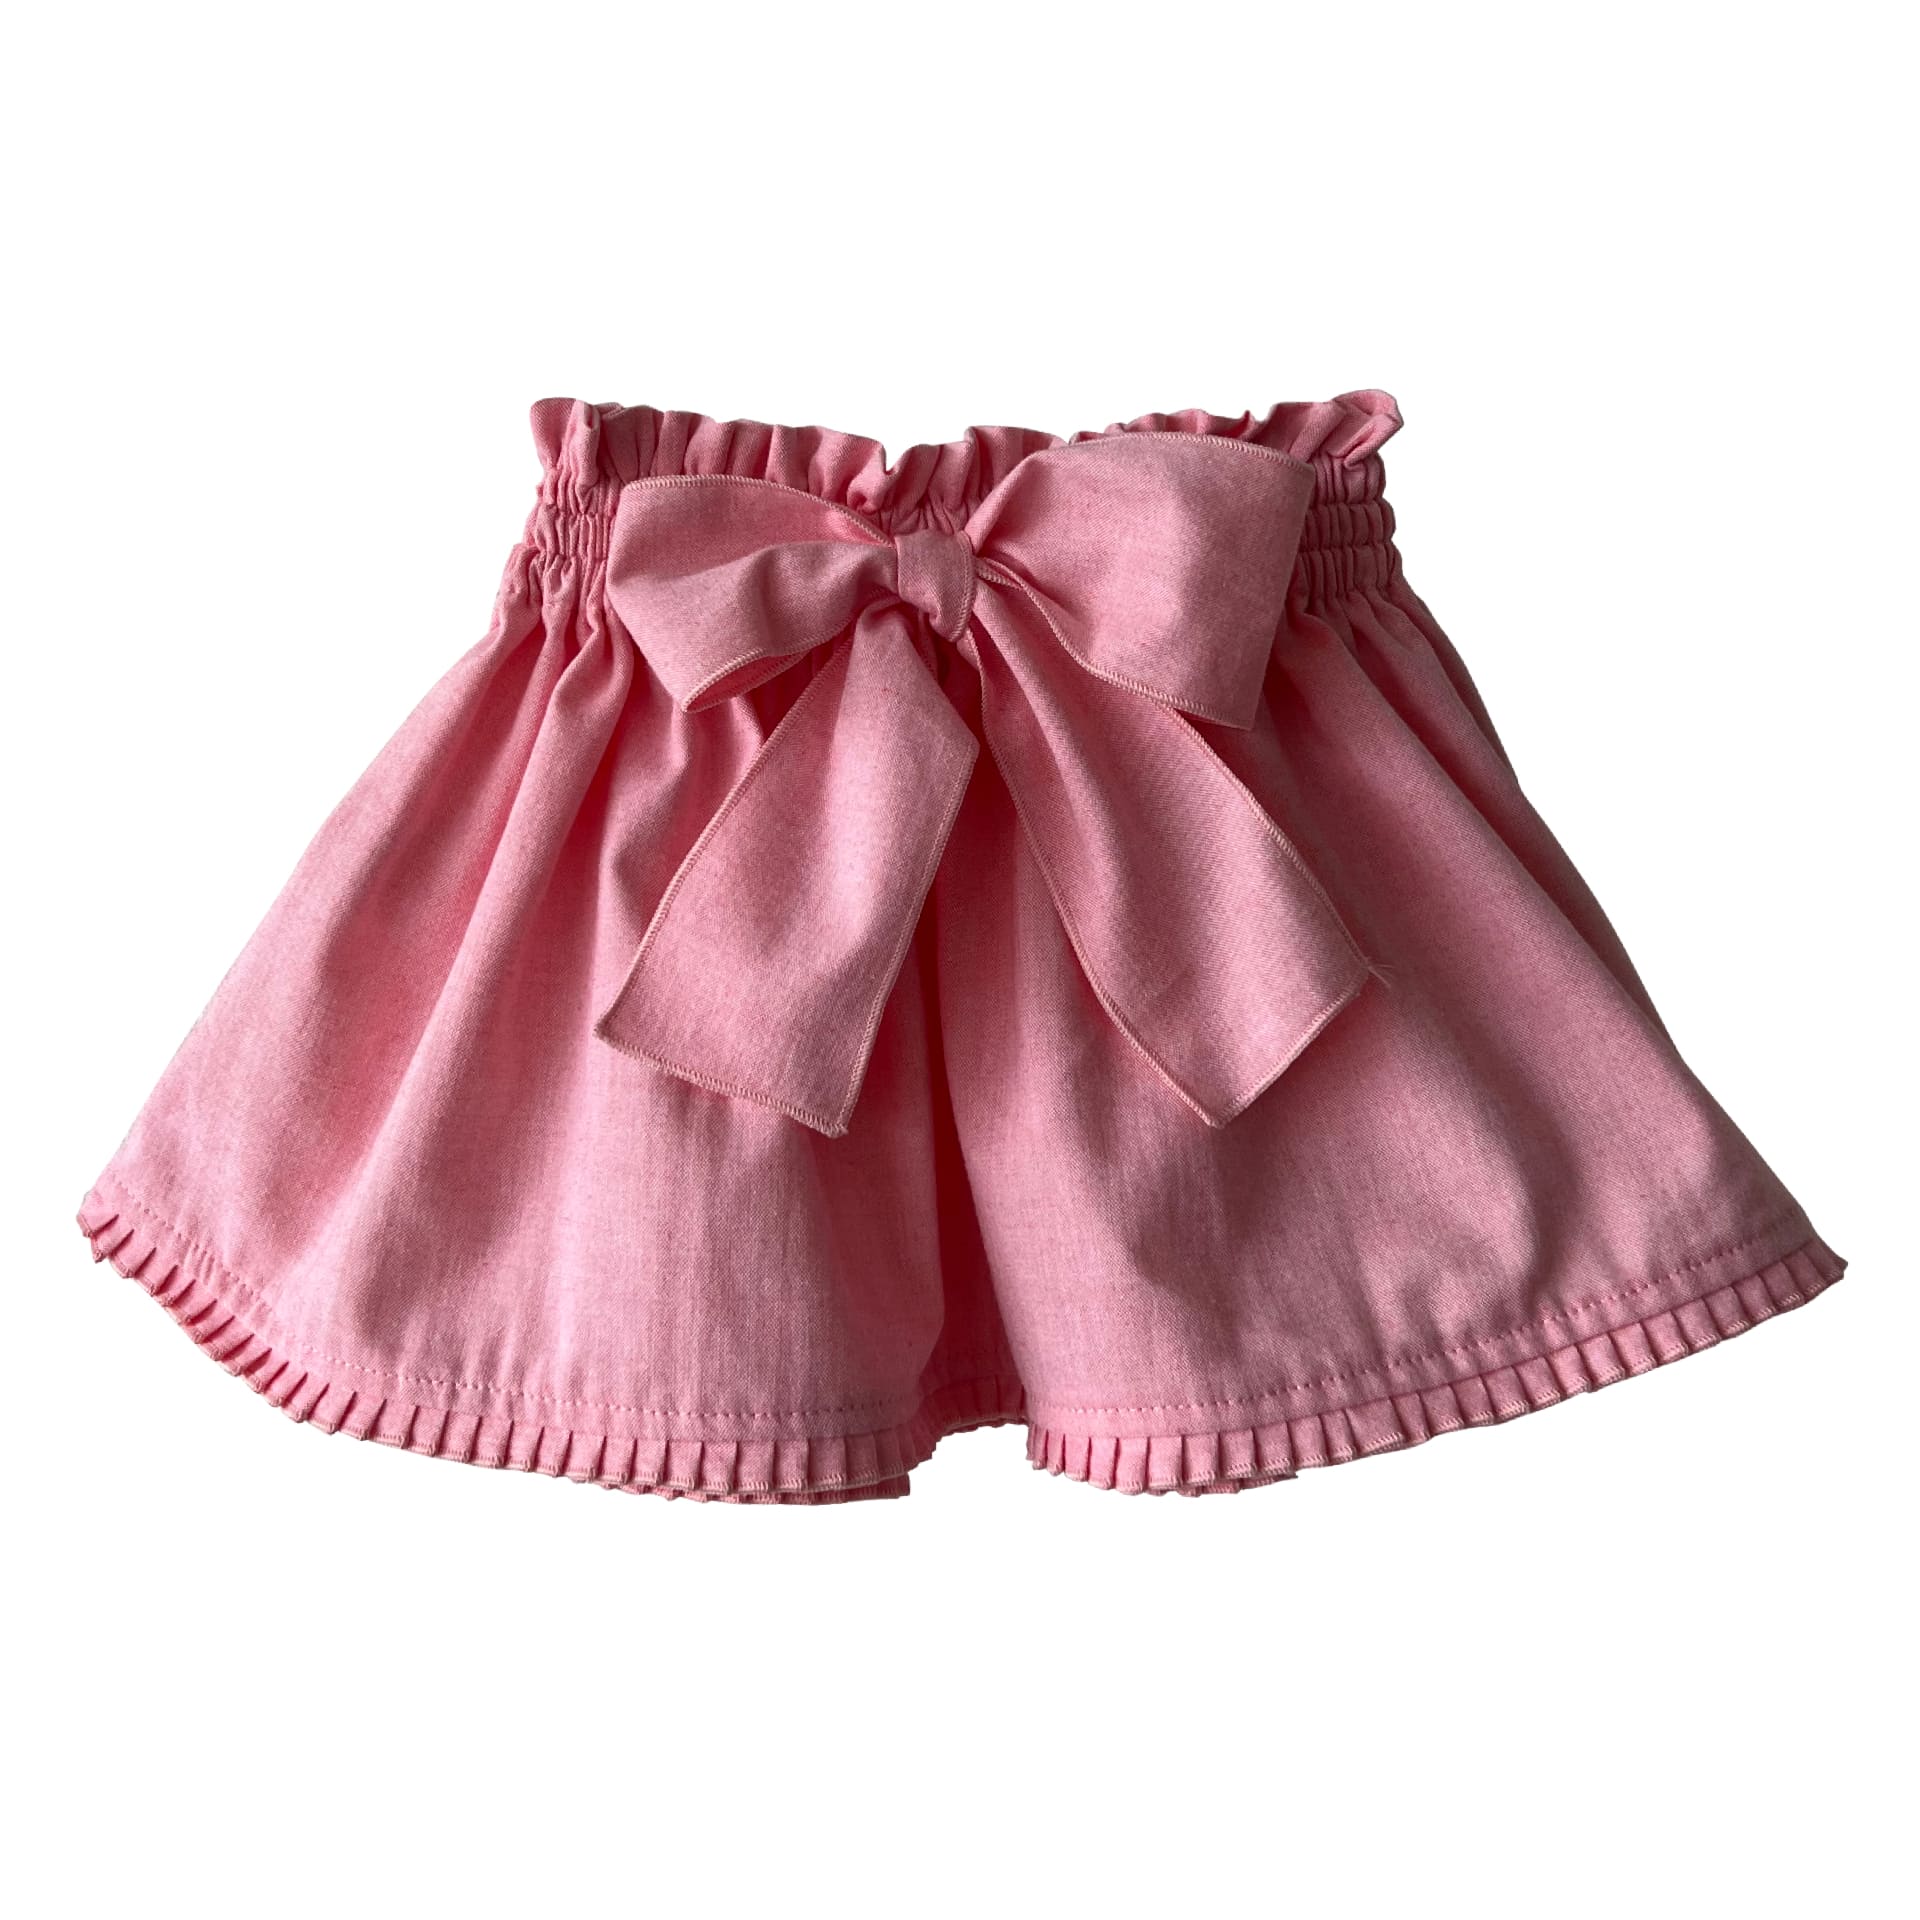 Pink chambray skirt